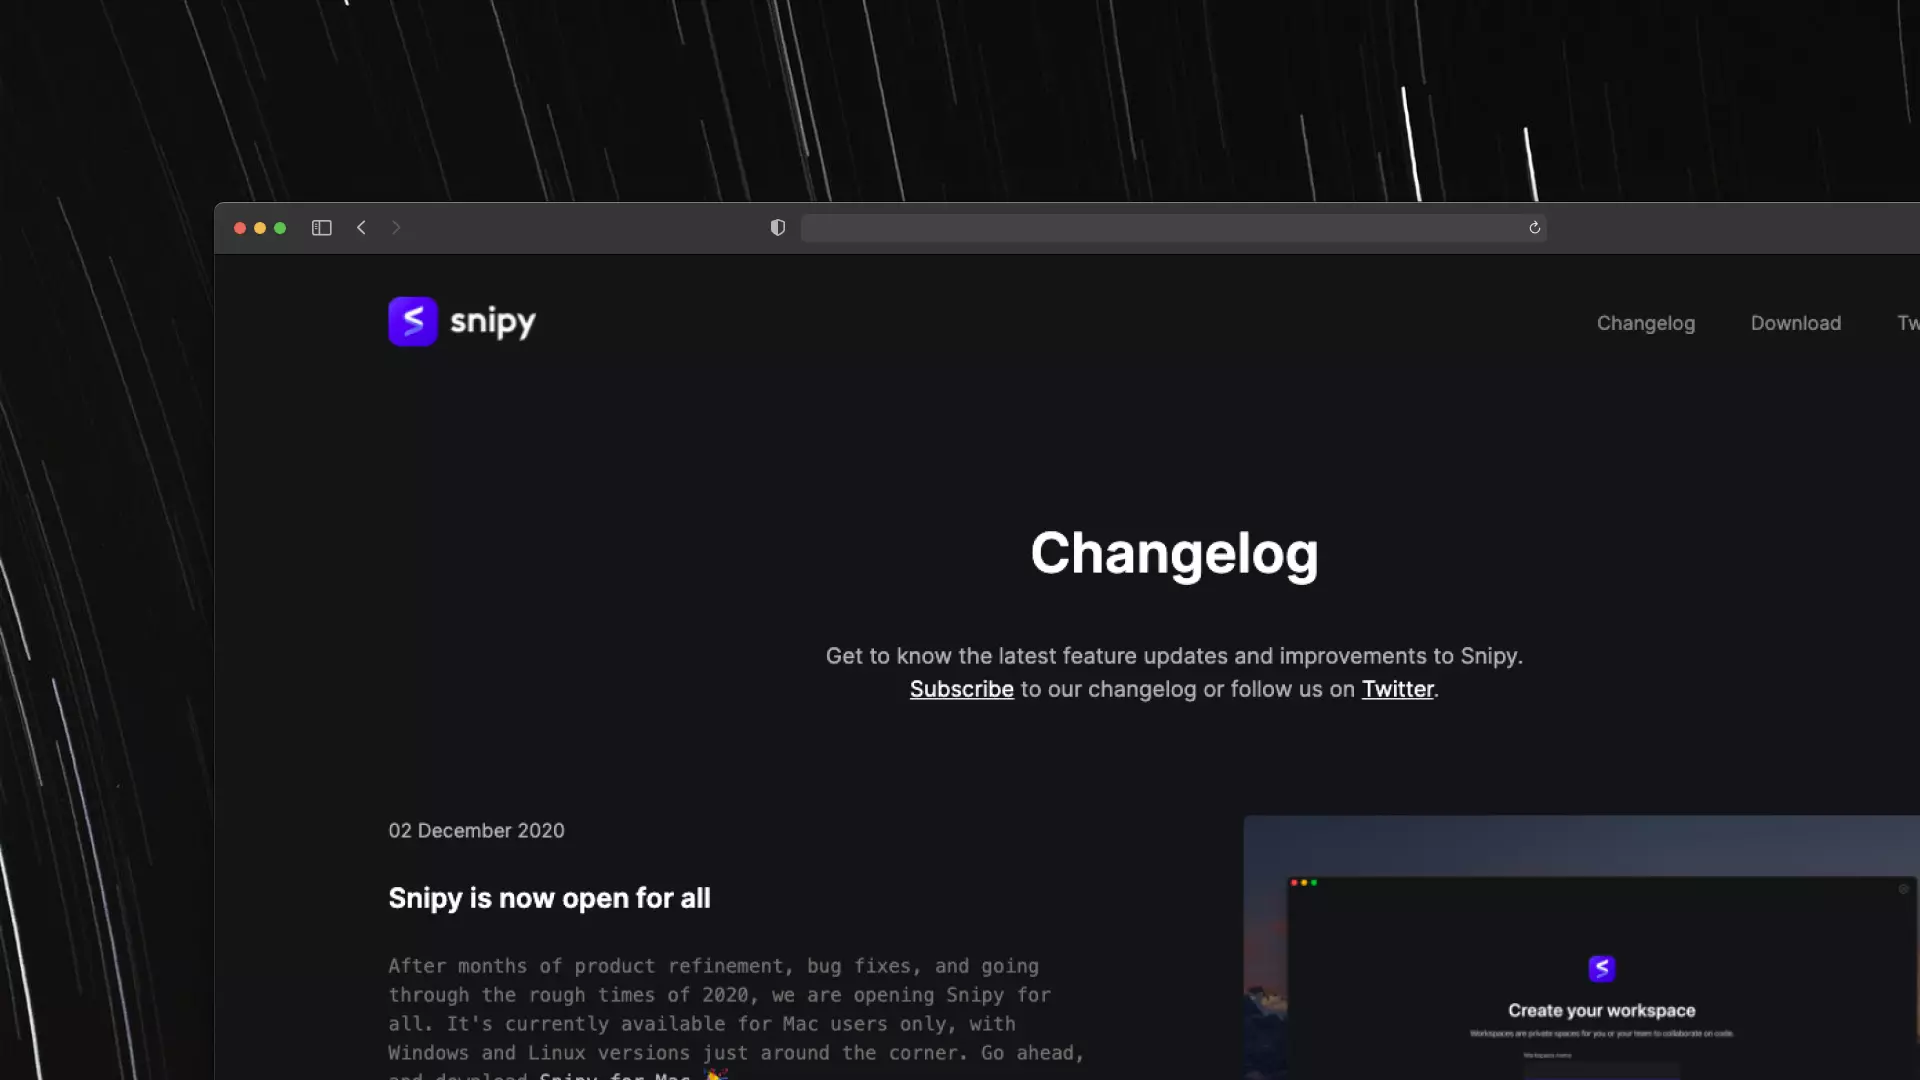 Snipy changelog screenshot